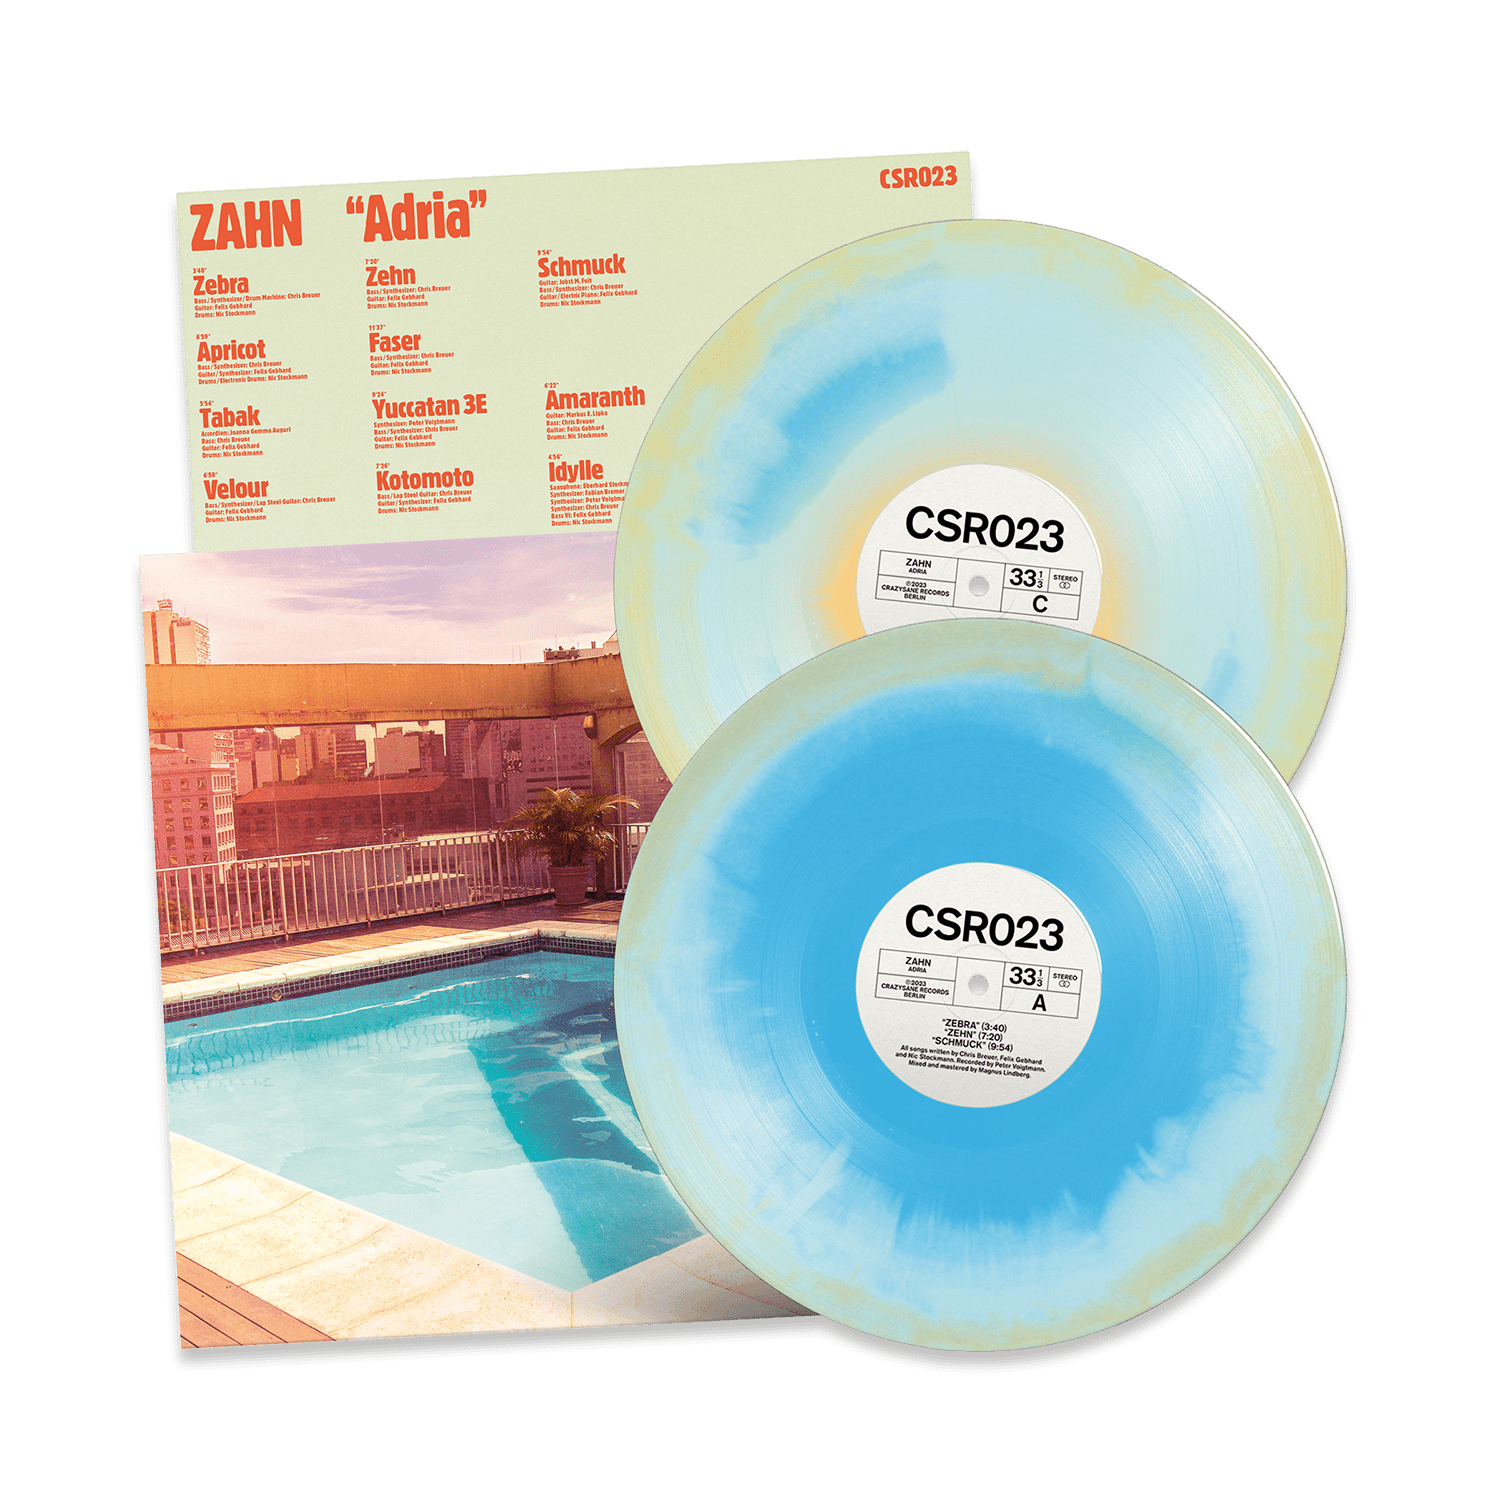  Blue Slide Park [2 LP]: CDs & Vinyl